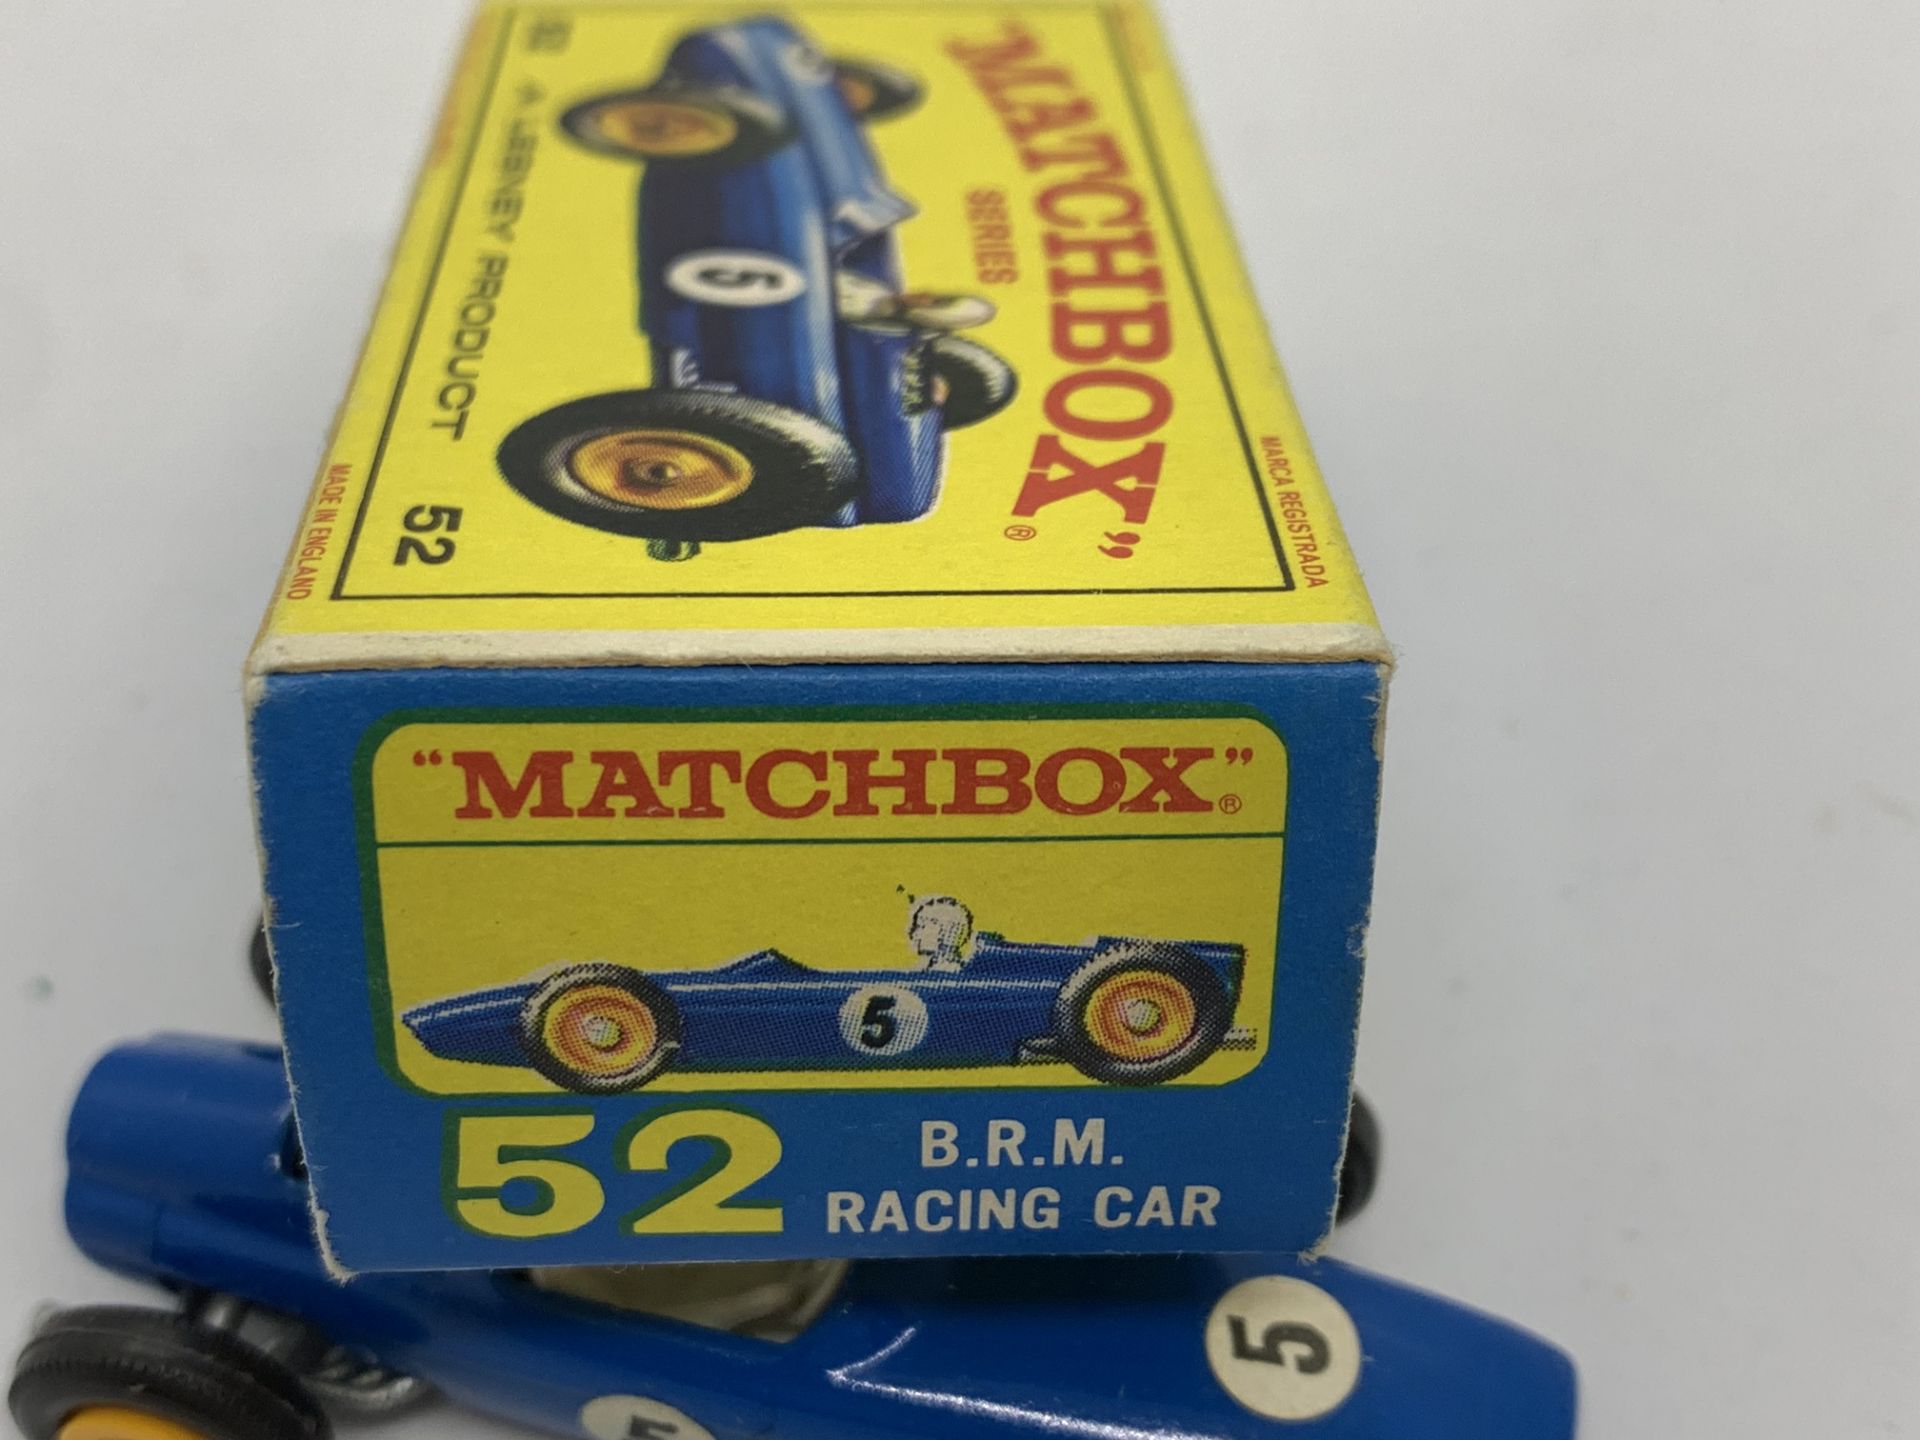 MATCHBOX B.R.M RACING CAR NO 52 WITH ORIGINAL BOX - NO RESERVE - Image 7 of 7